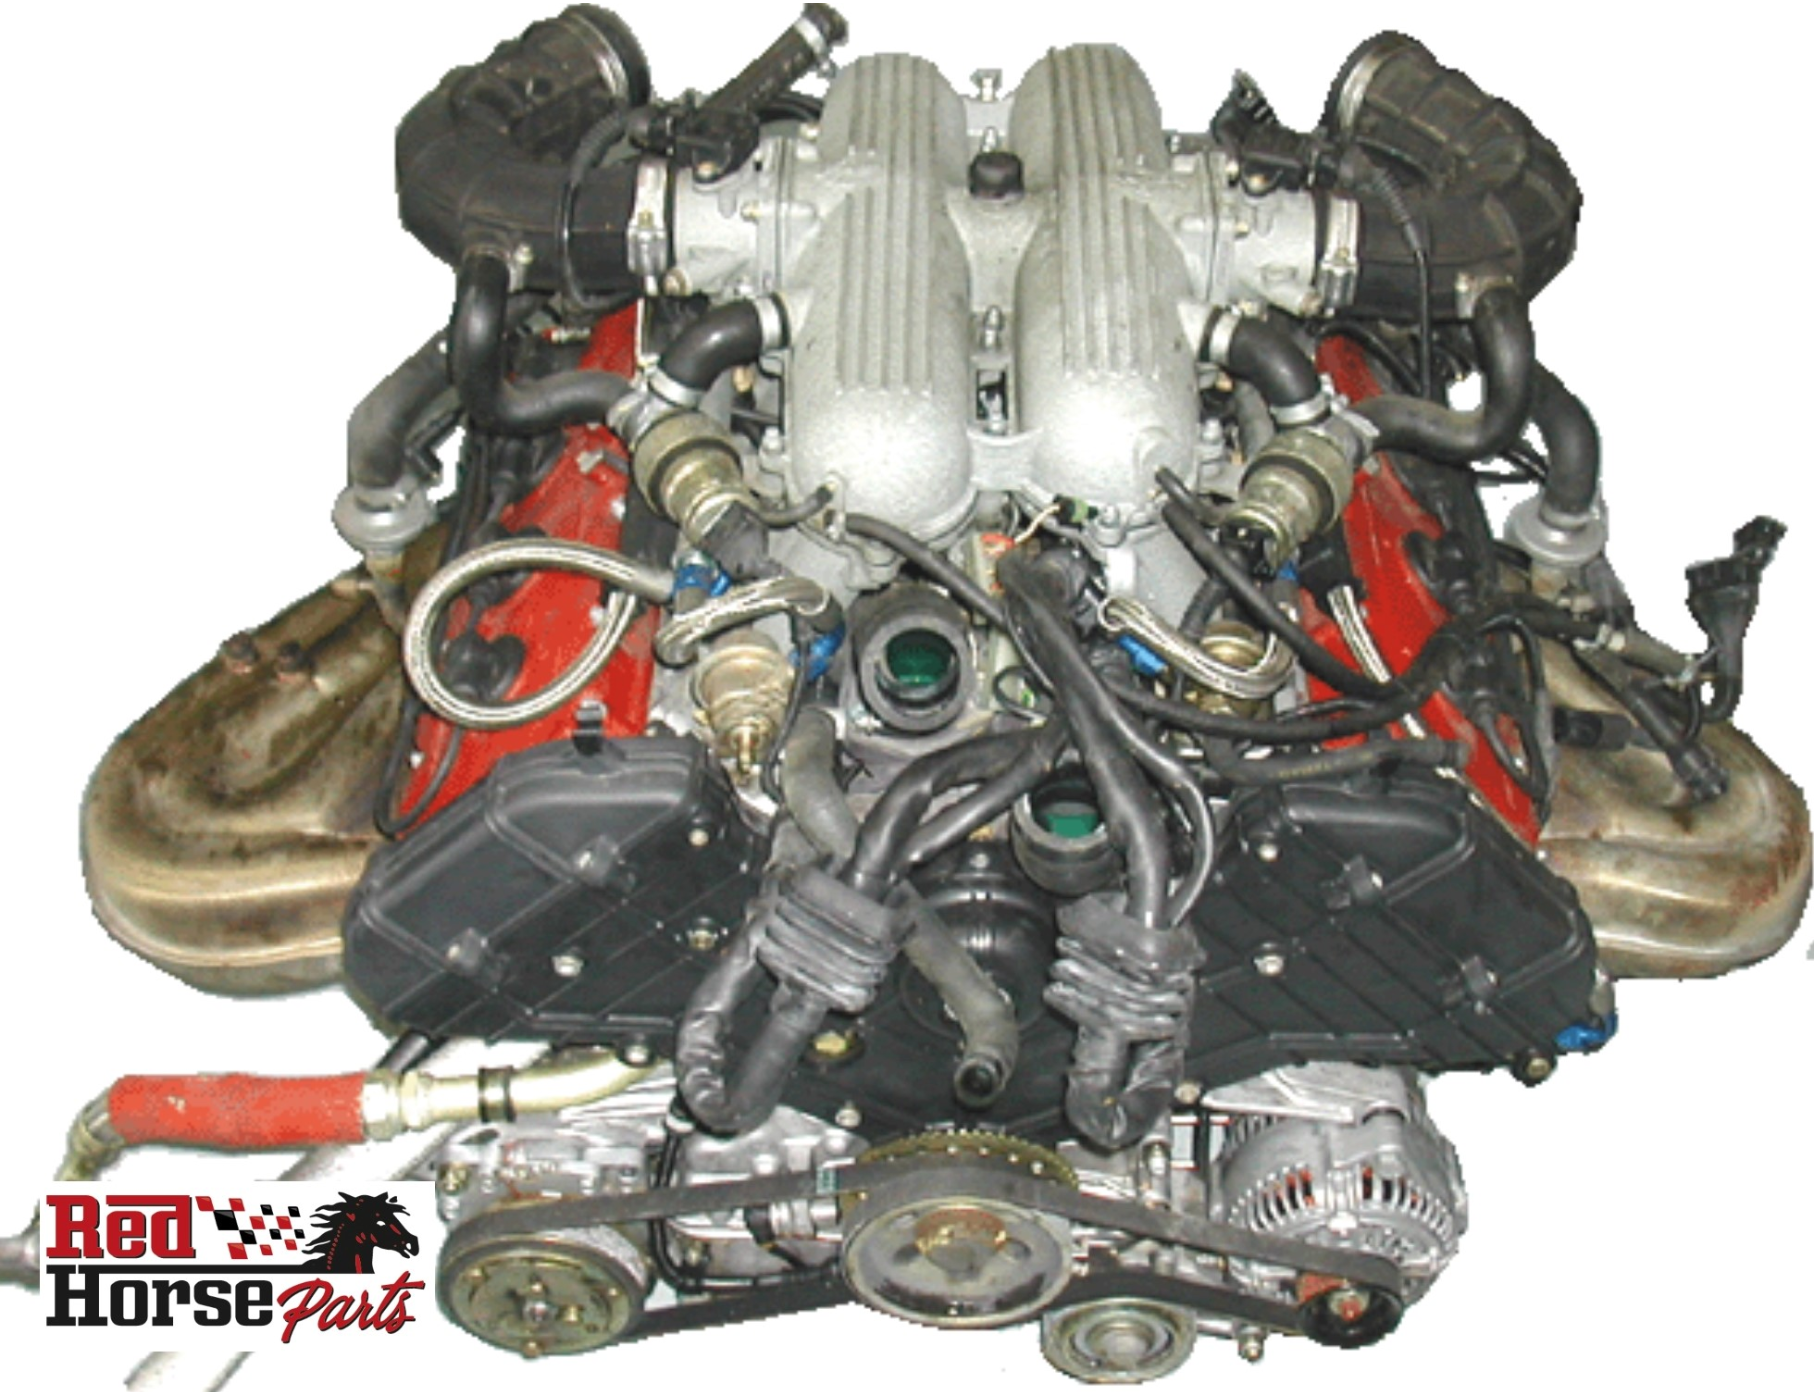 Ferrari 348 engine